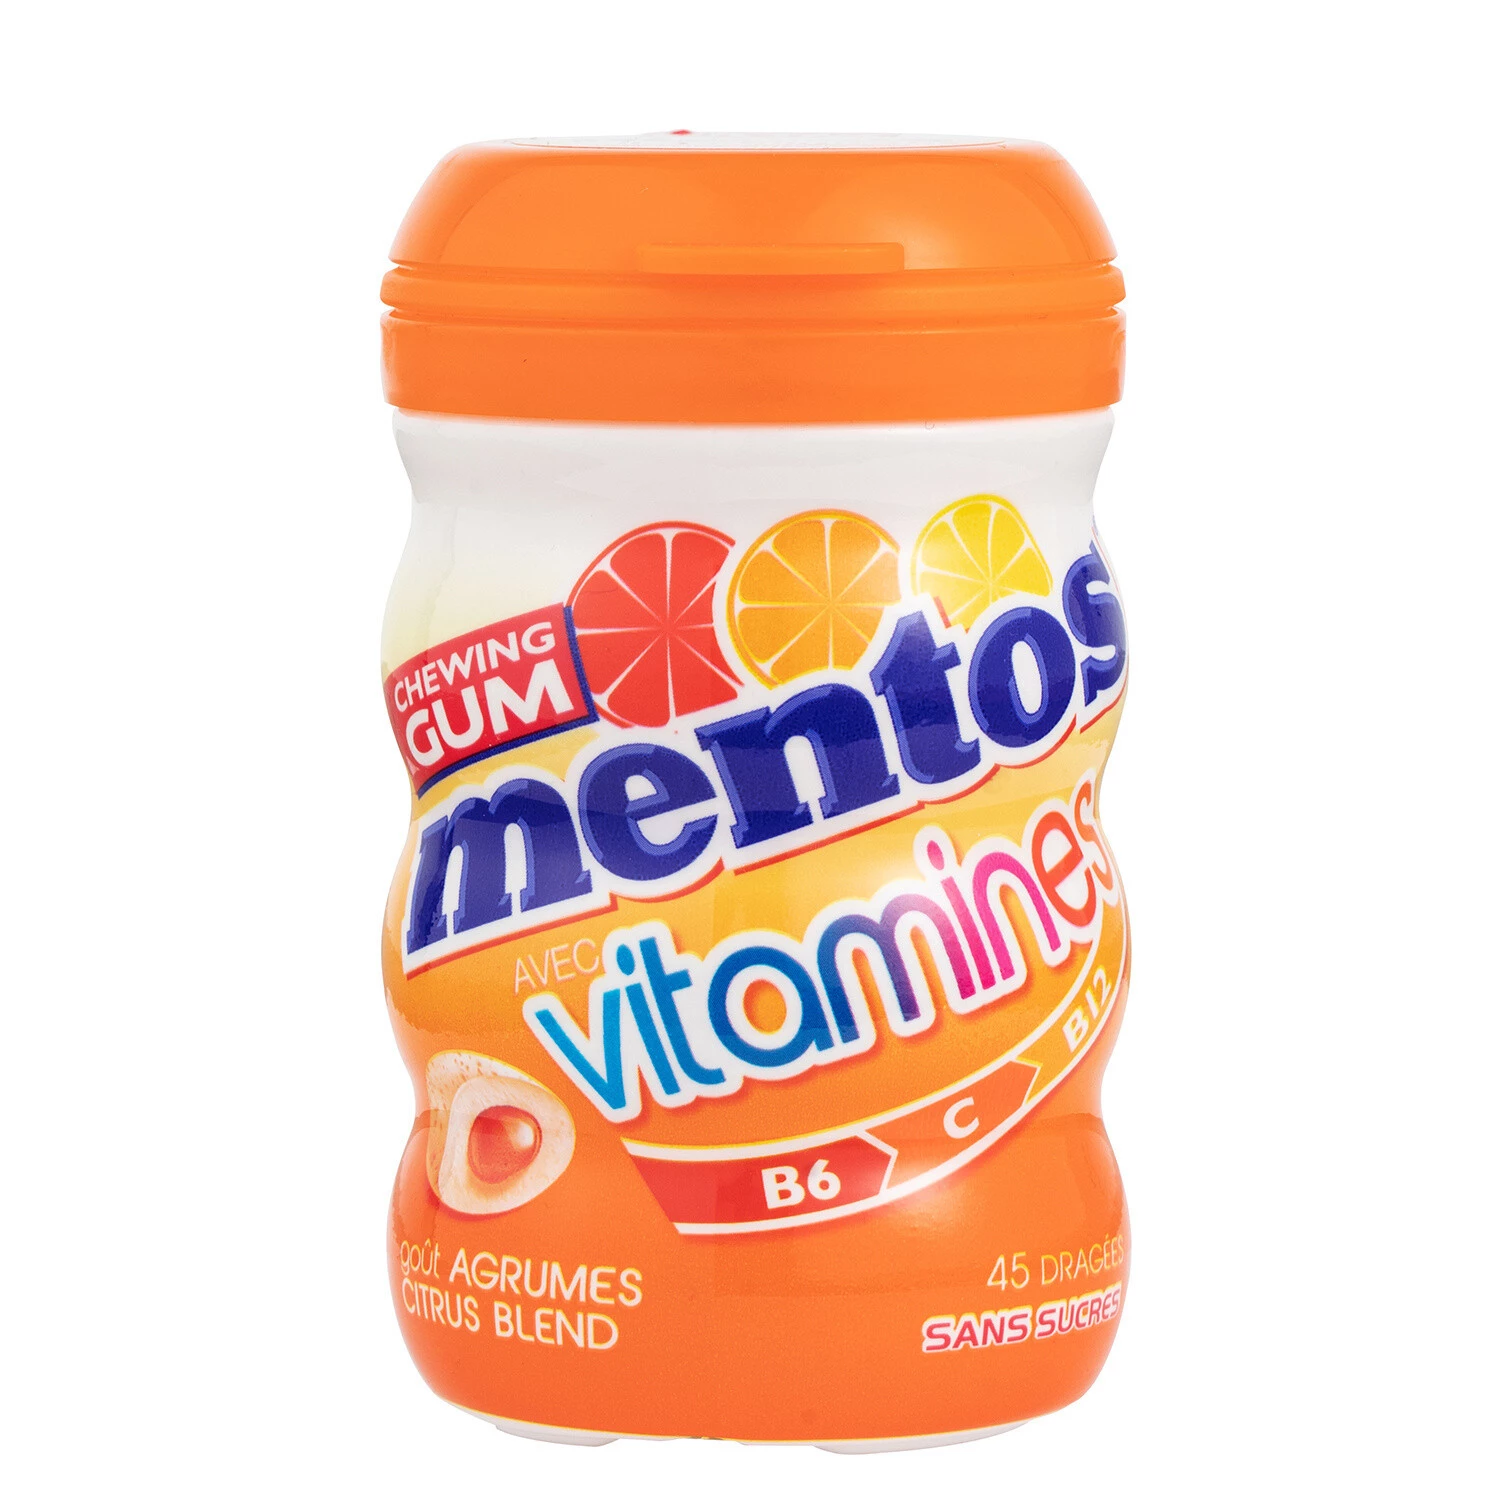 Chewing gum with Citrus Flavor Vitamins; x45 - MENTOS